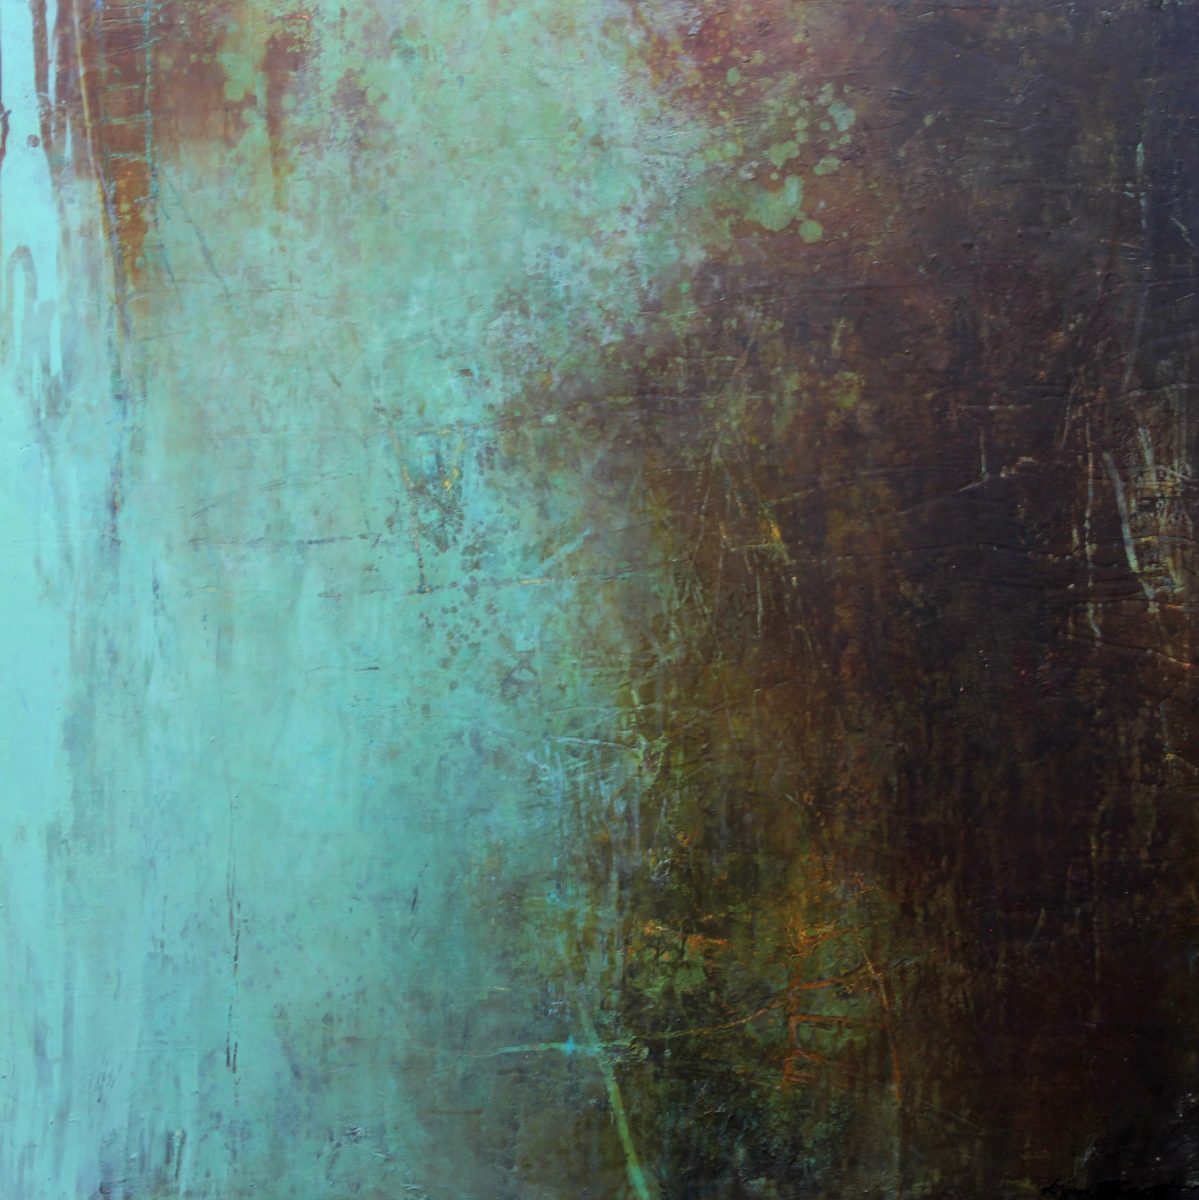 Ever Deeper There | Kym Barrett | Oils and cold wax medium on board | 62 x 62 cm framed in oak | $1500